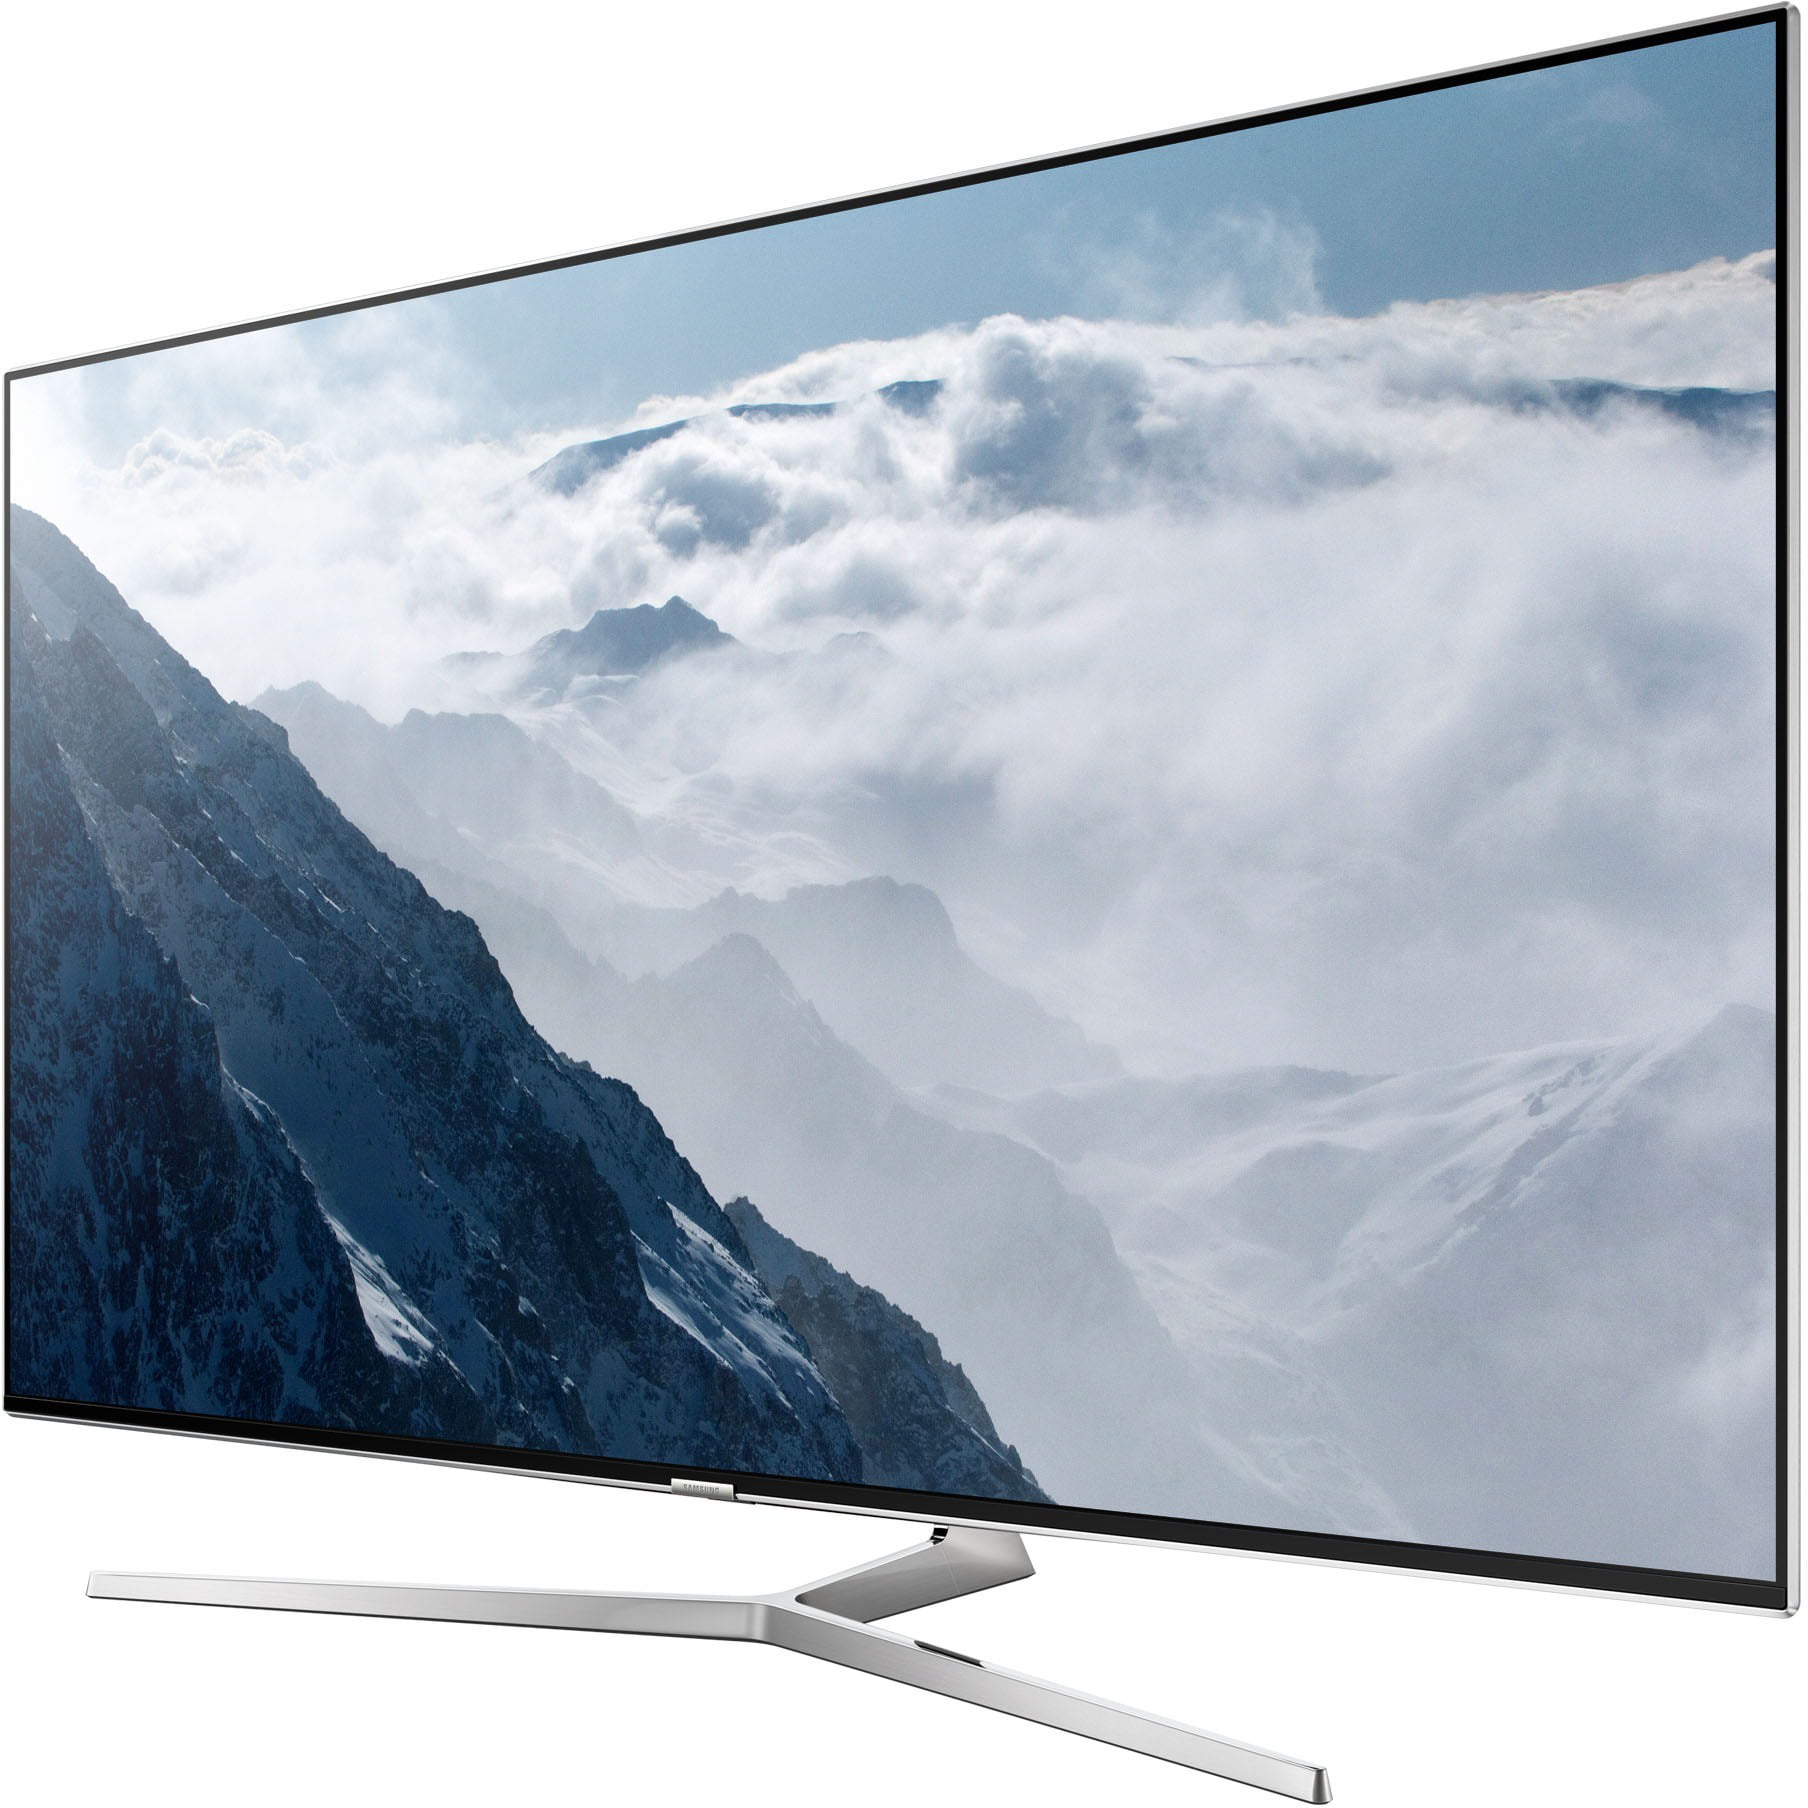 Samsung 65" Class 4K UHDTV (2160p) Smart LEDLCD TV (UN65KS9000F